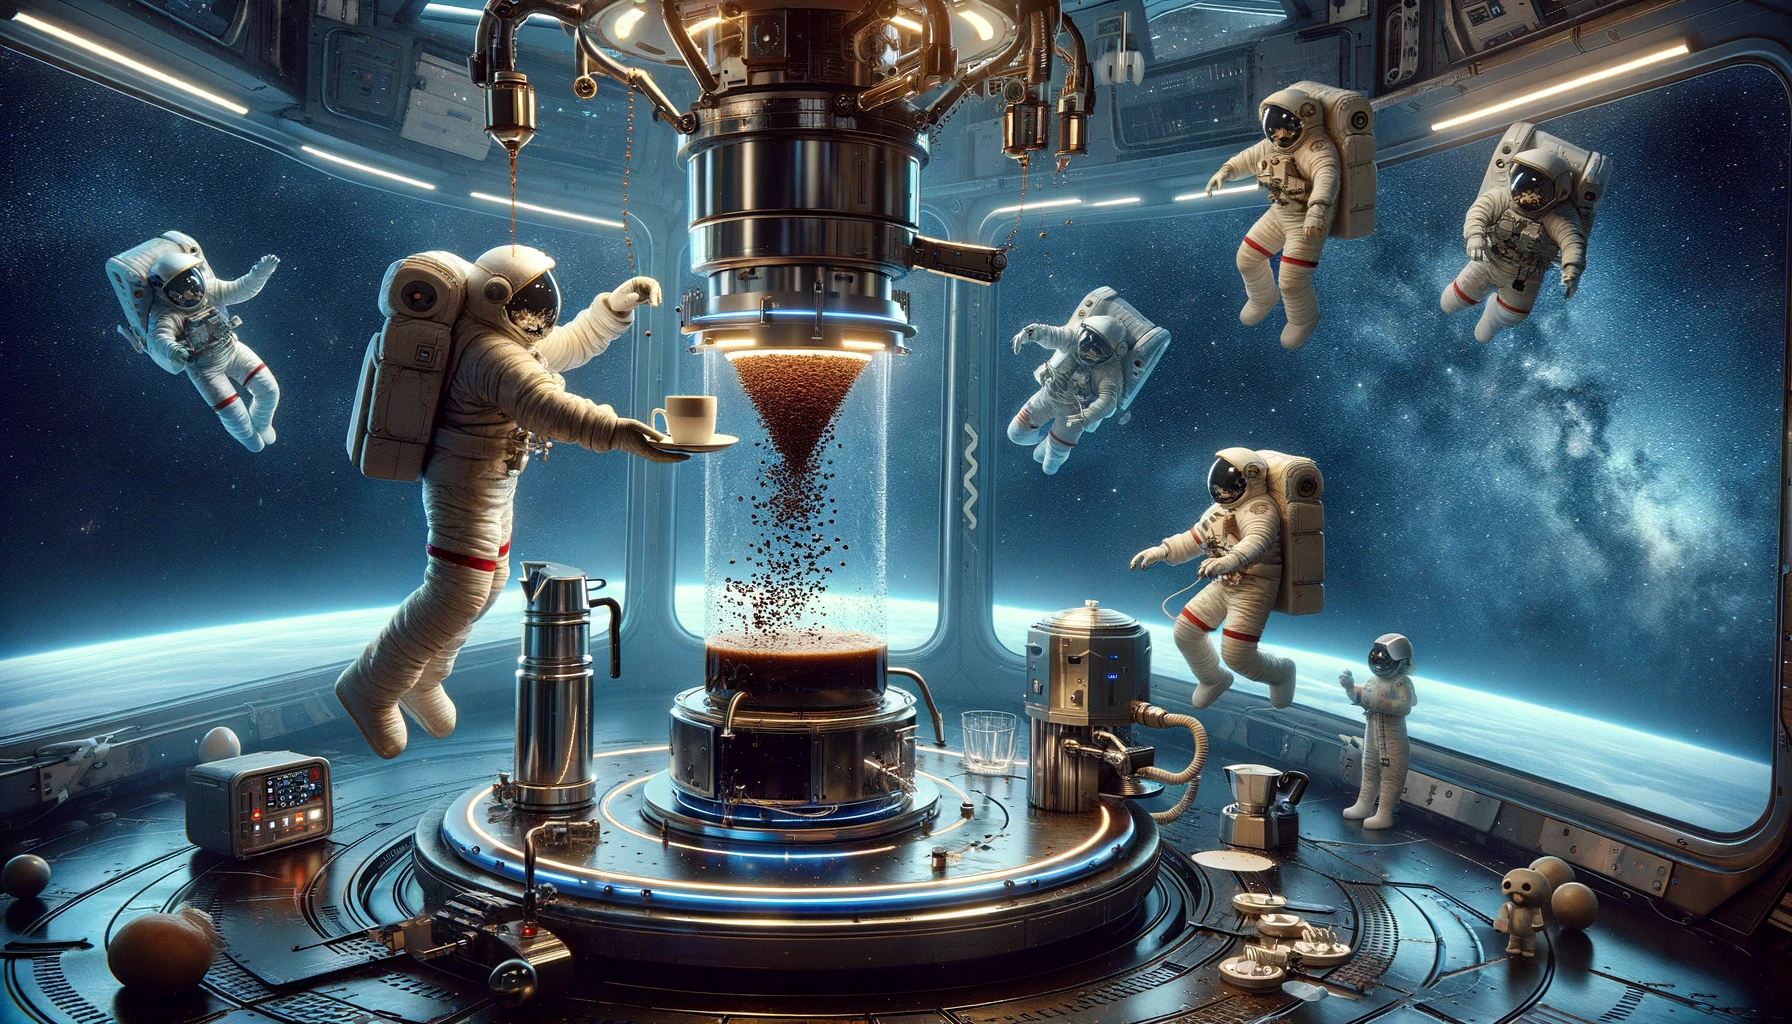 A futuristic space station scene, illustrating the concept of zero gravity coffee brewing. Astronauts of diverse descents